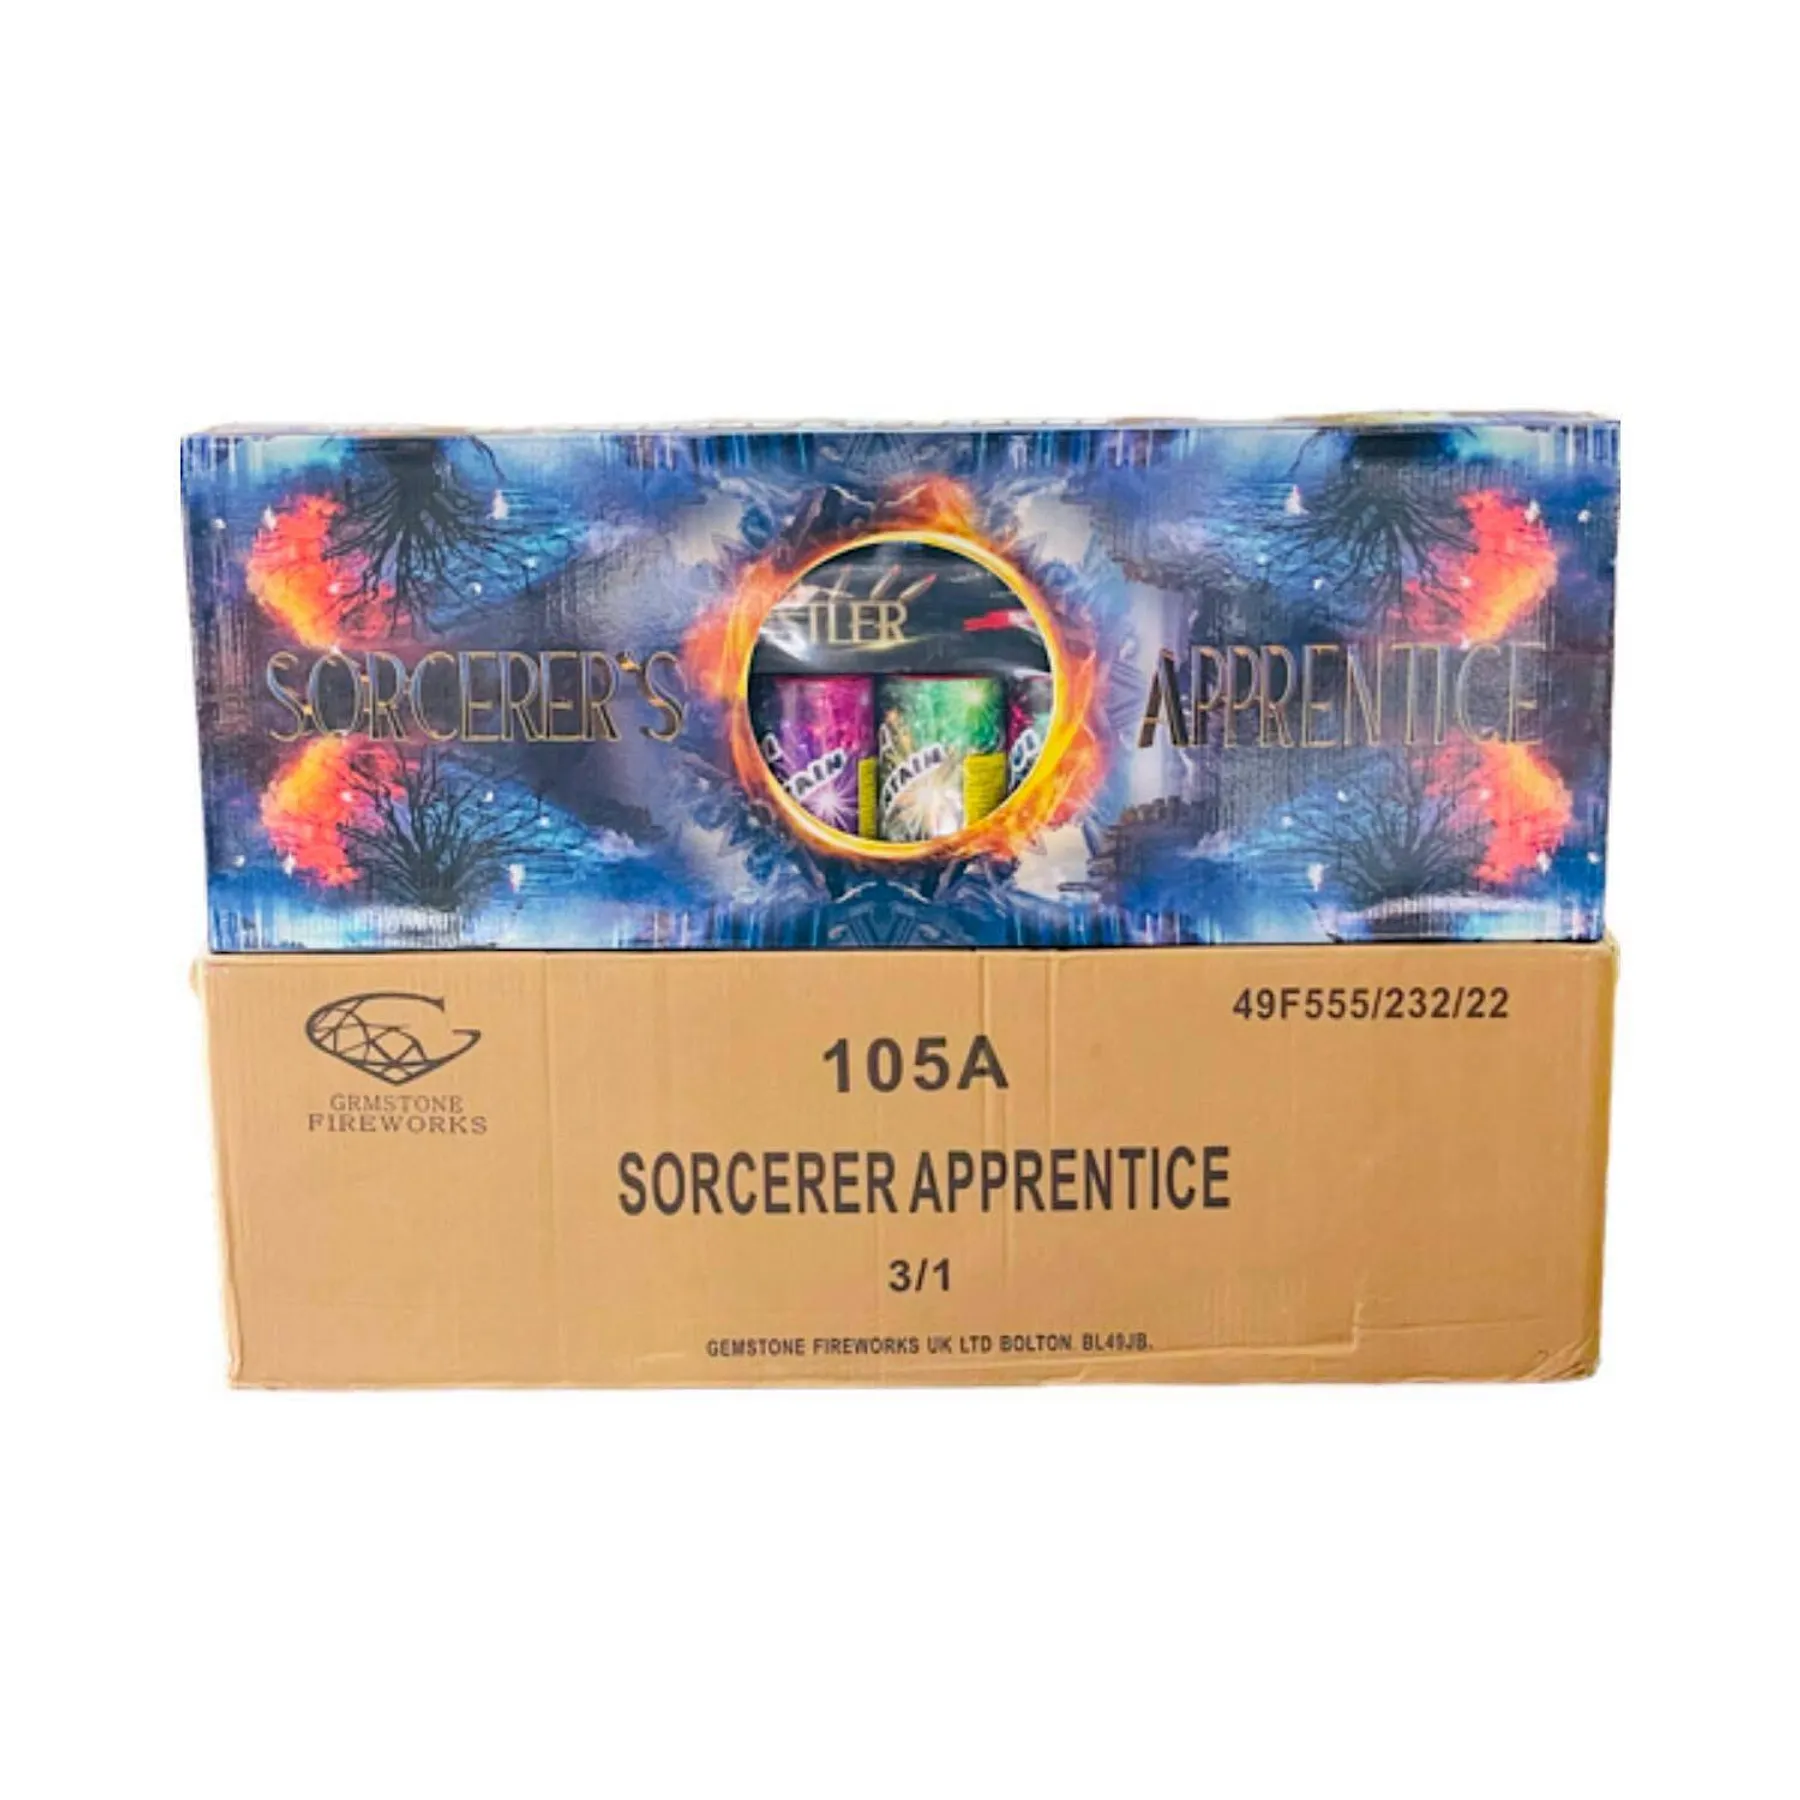 Sorcerers Apprentice selection box